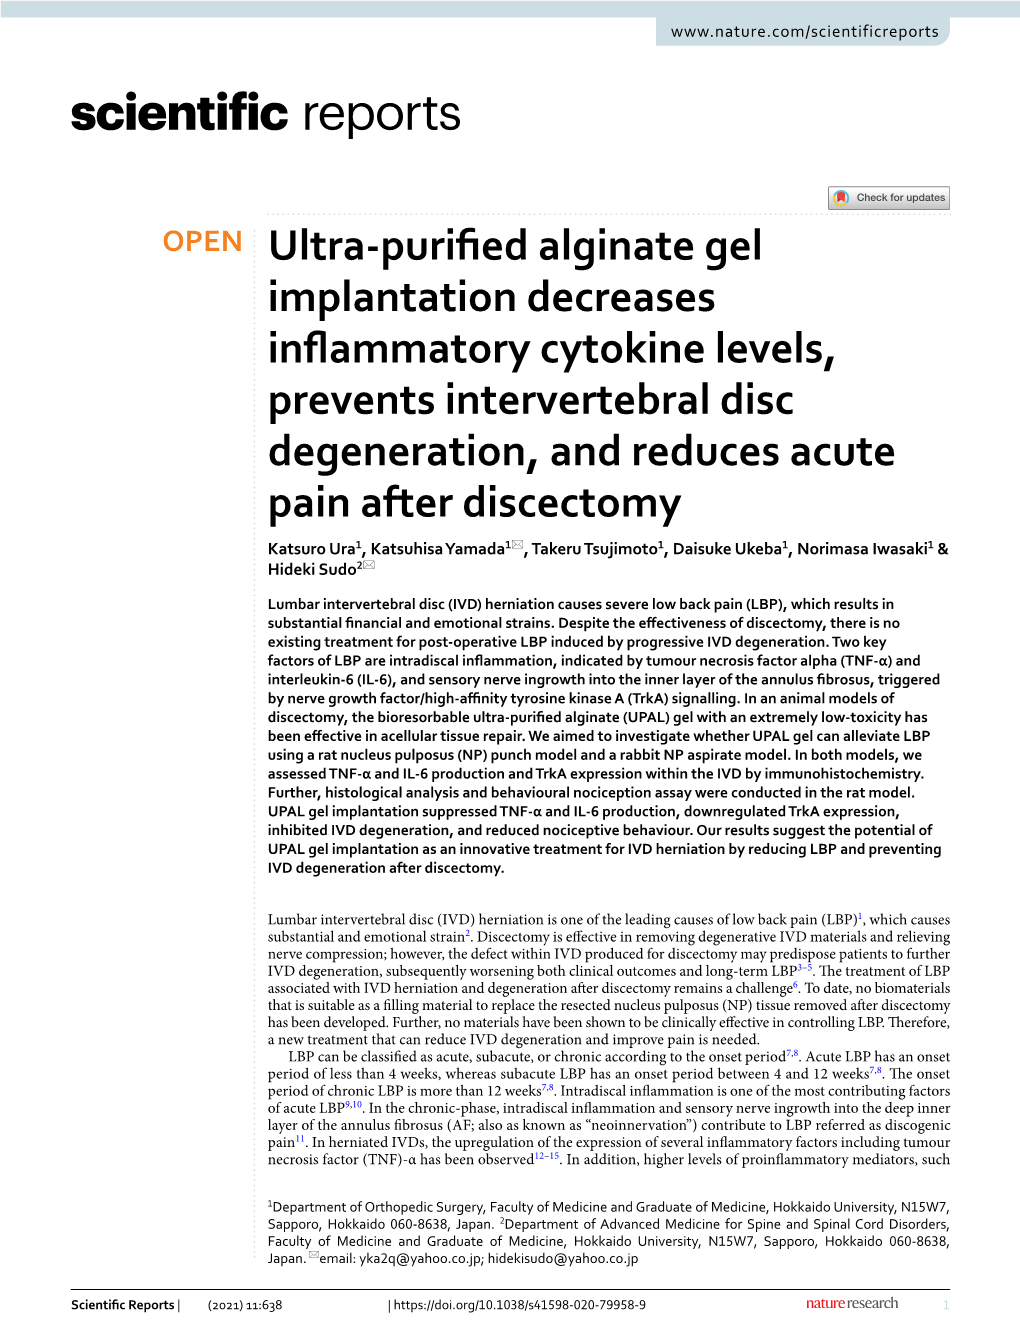 Ultra-Purified Alginate Gel Implantation Decreases Inflammatory Cytokine